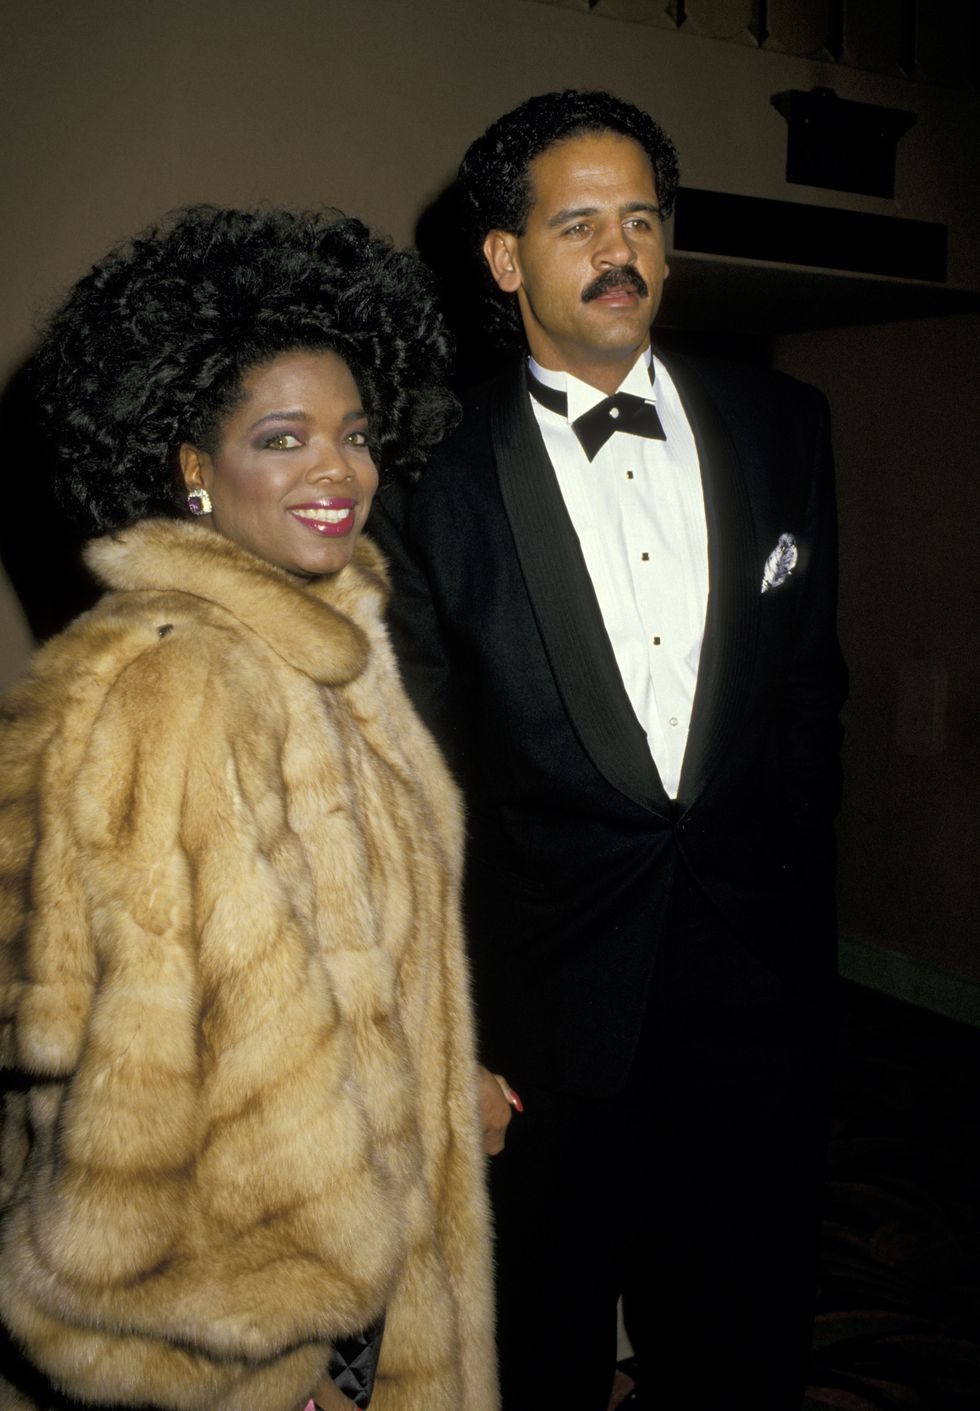 Oprah Winfrey and Stedman Graham